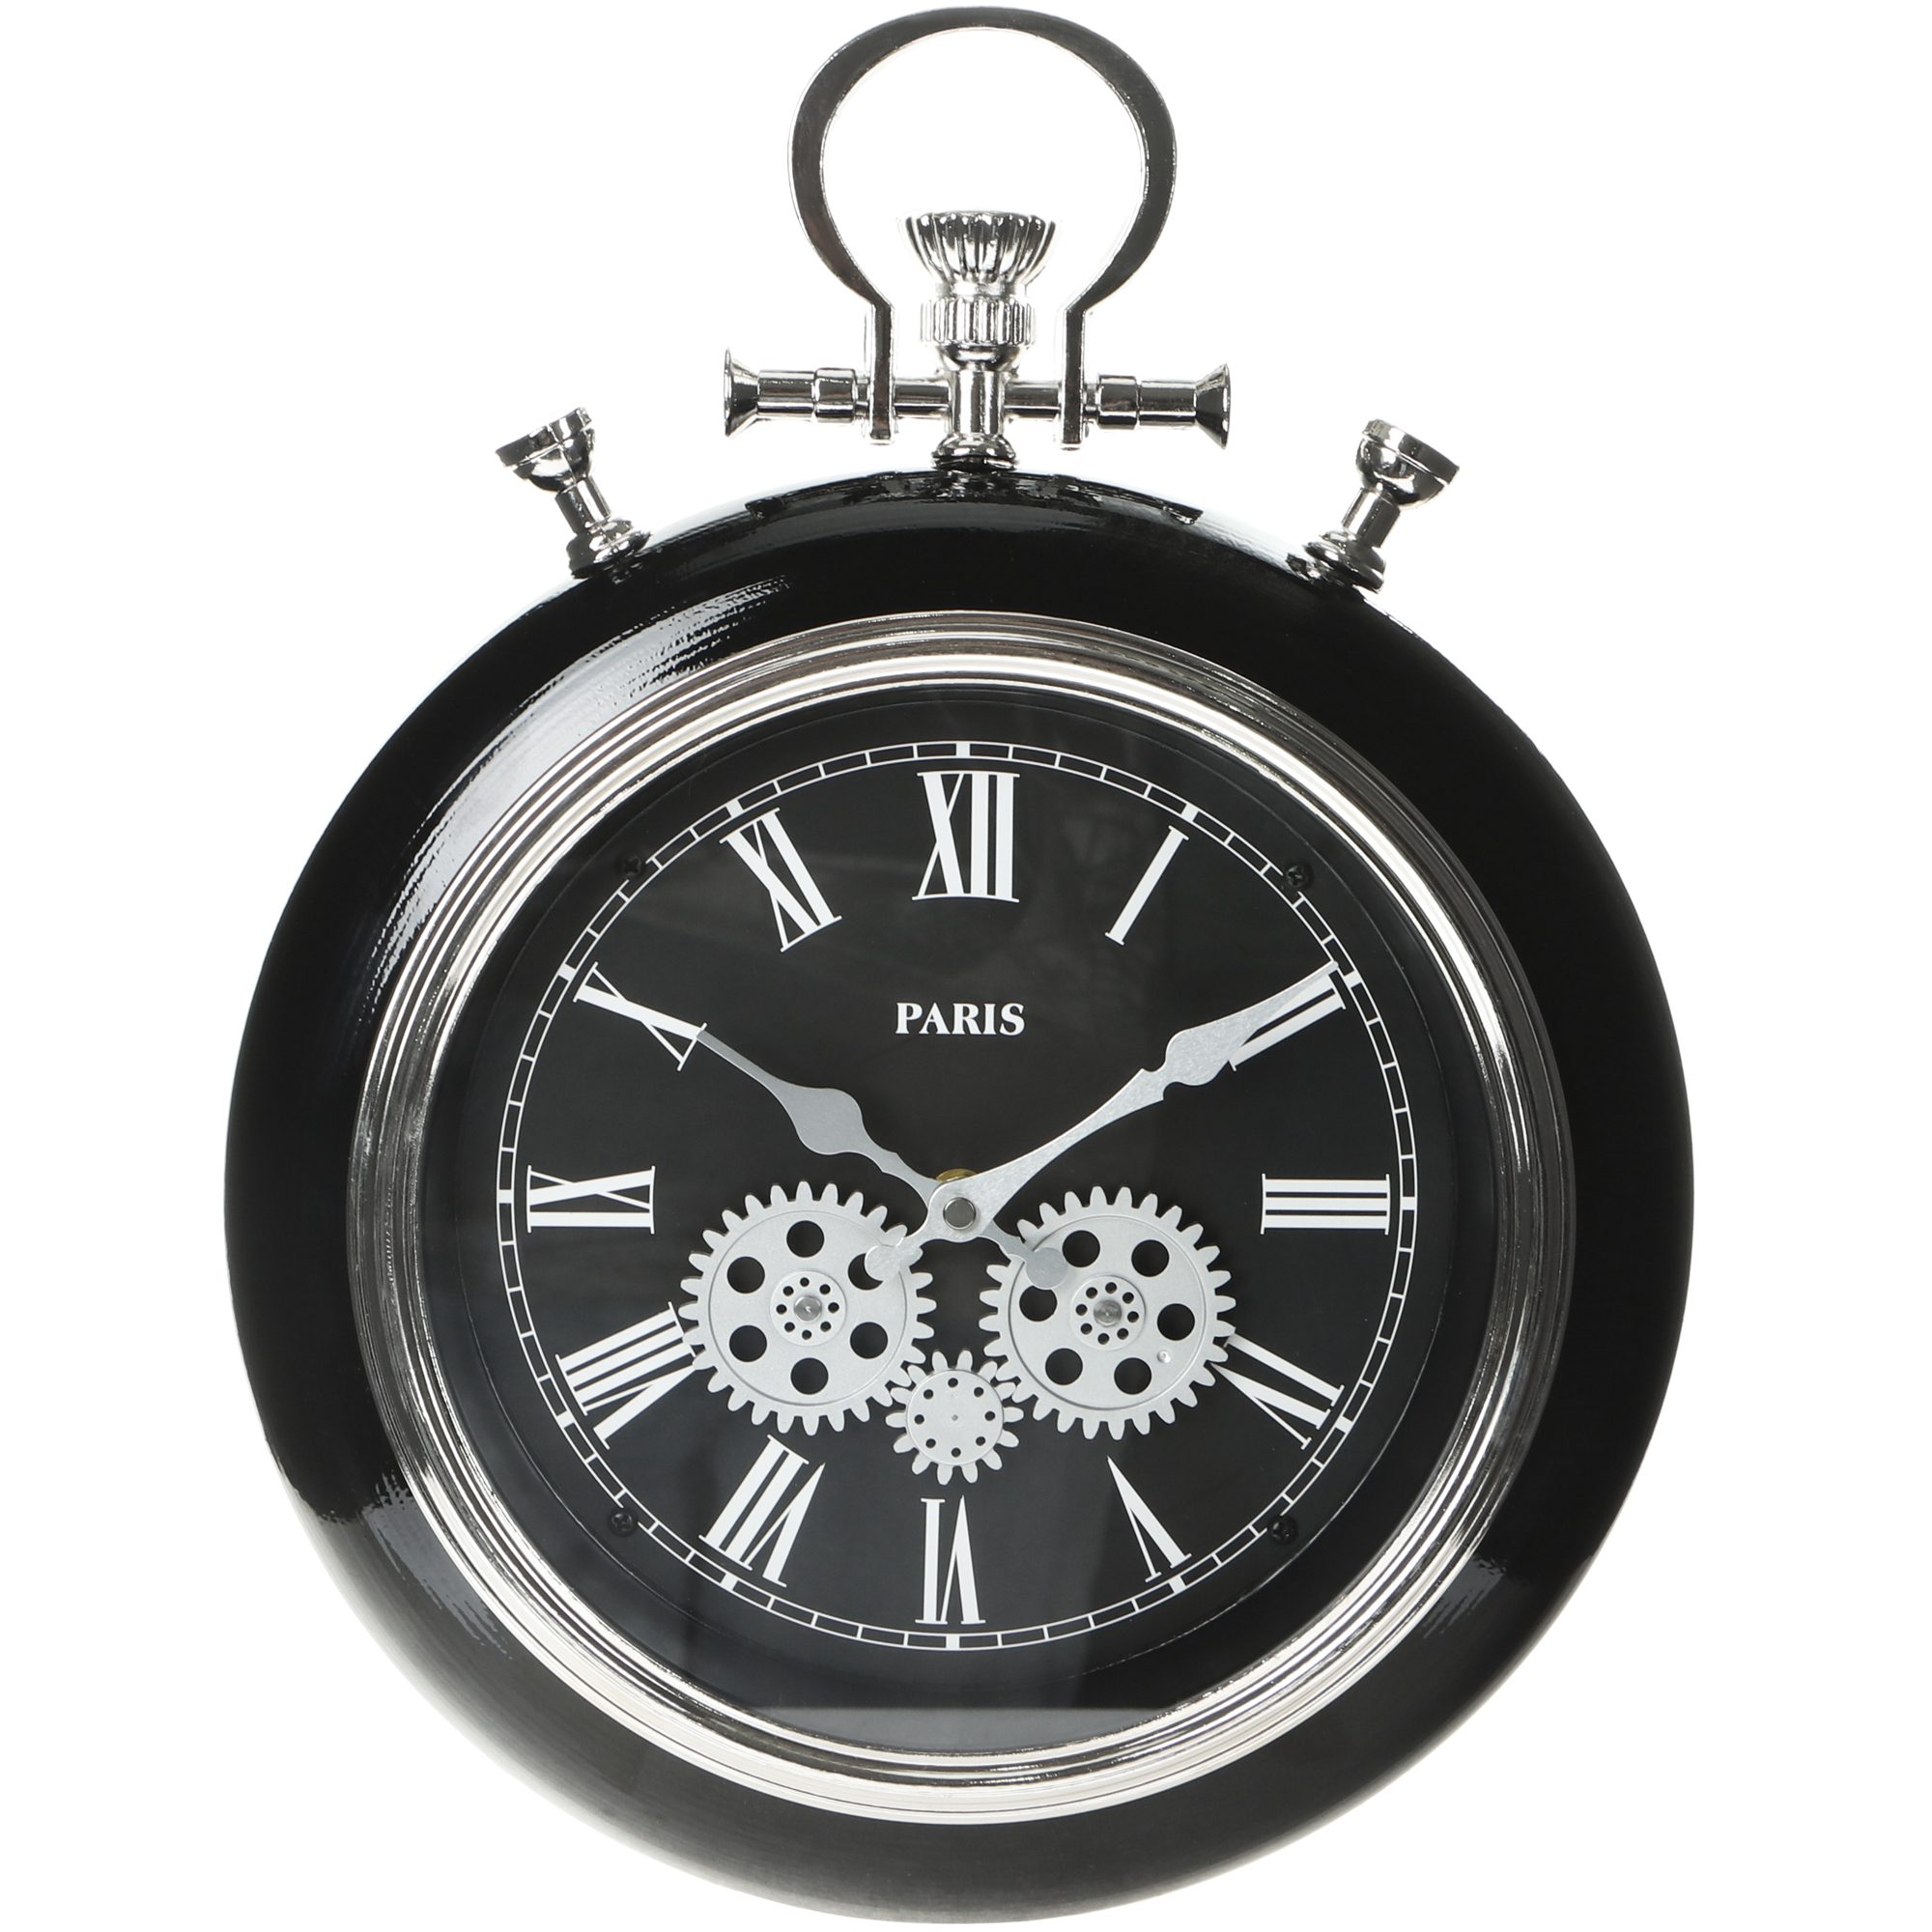 Часы настенные IsTime Gear чёрные 31х6,5х41 см часы электронные настольные будильник термометр с проекцией зеленые цифры 19 2х6 5см